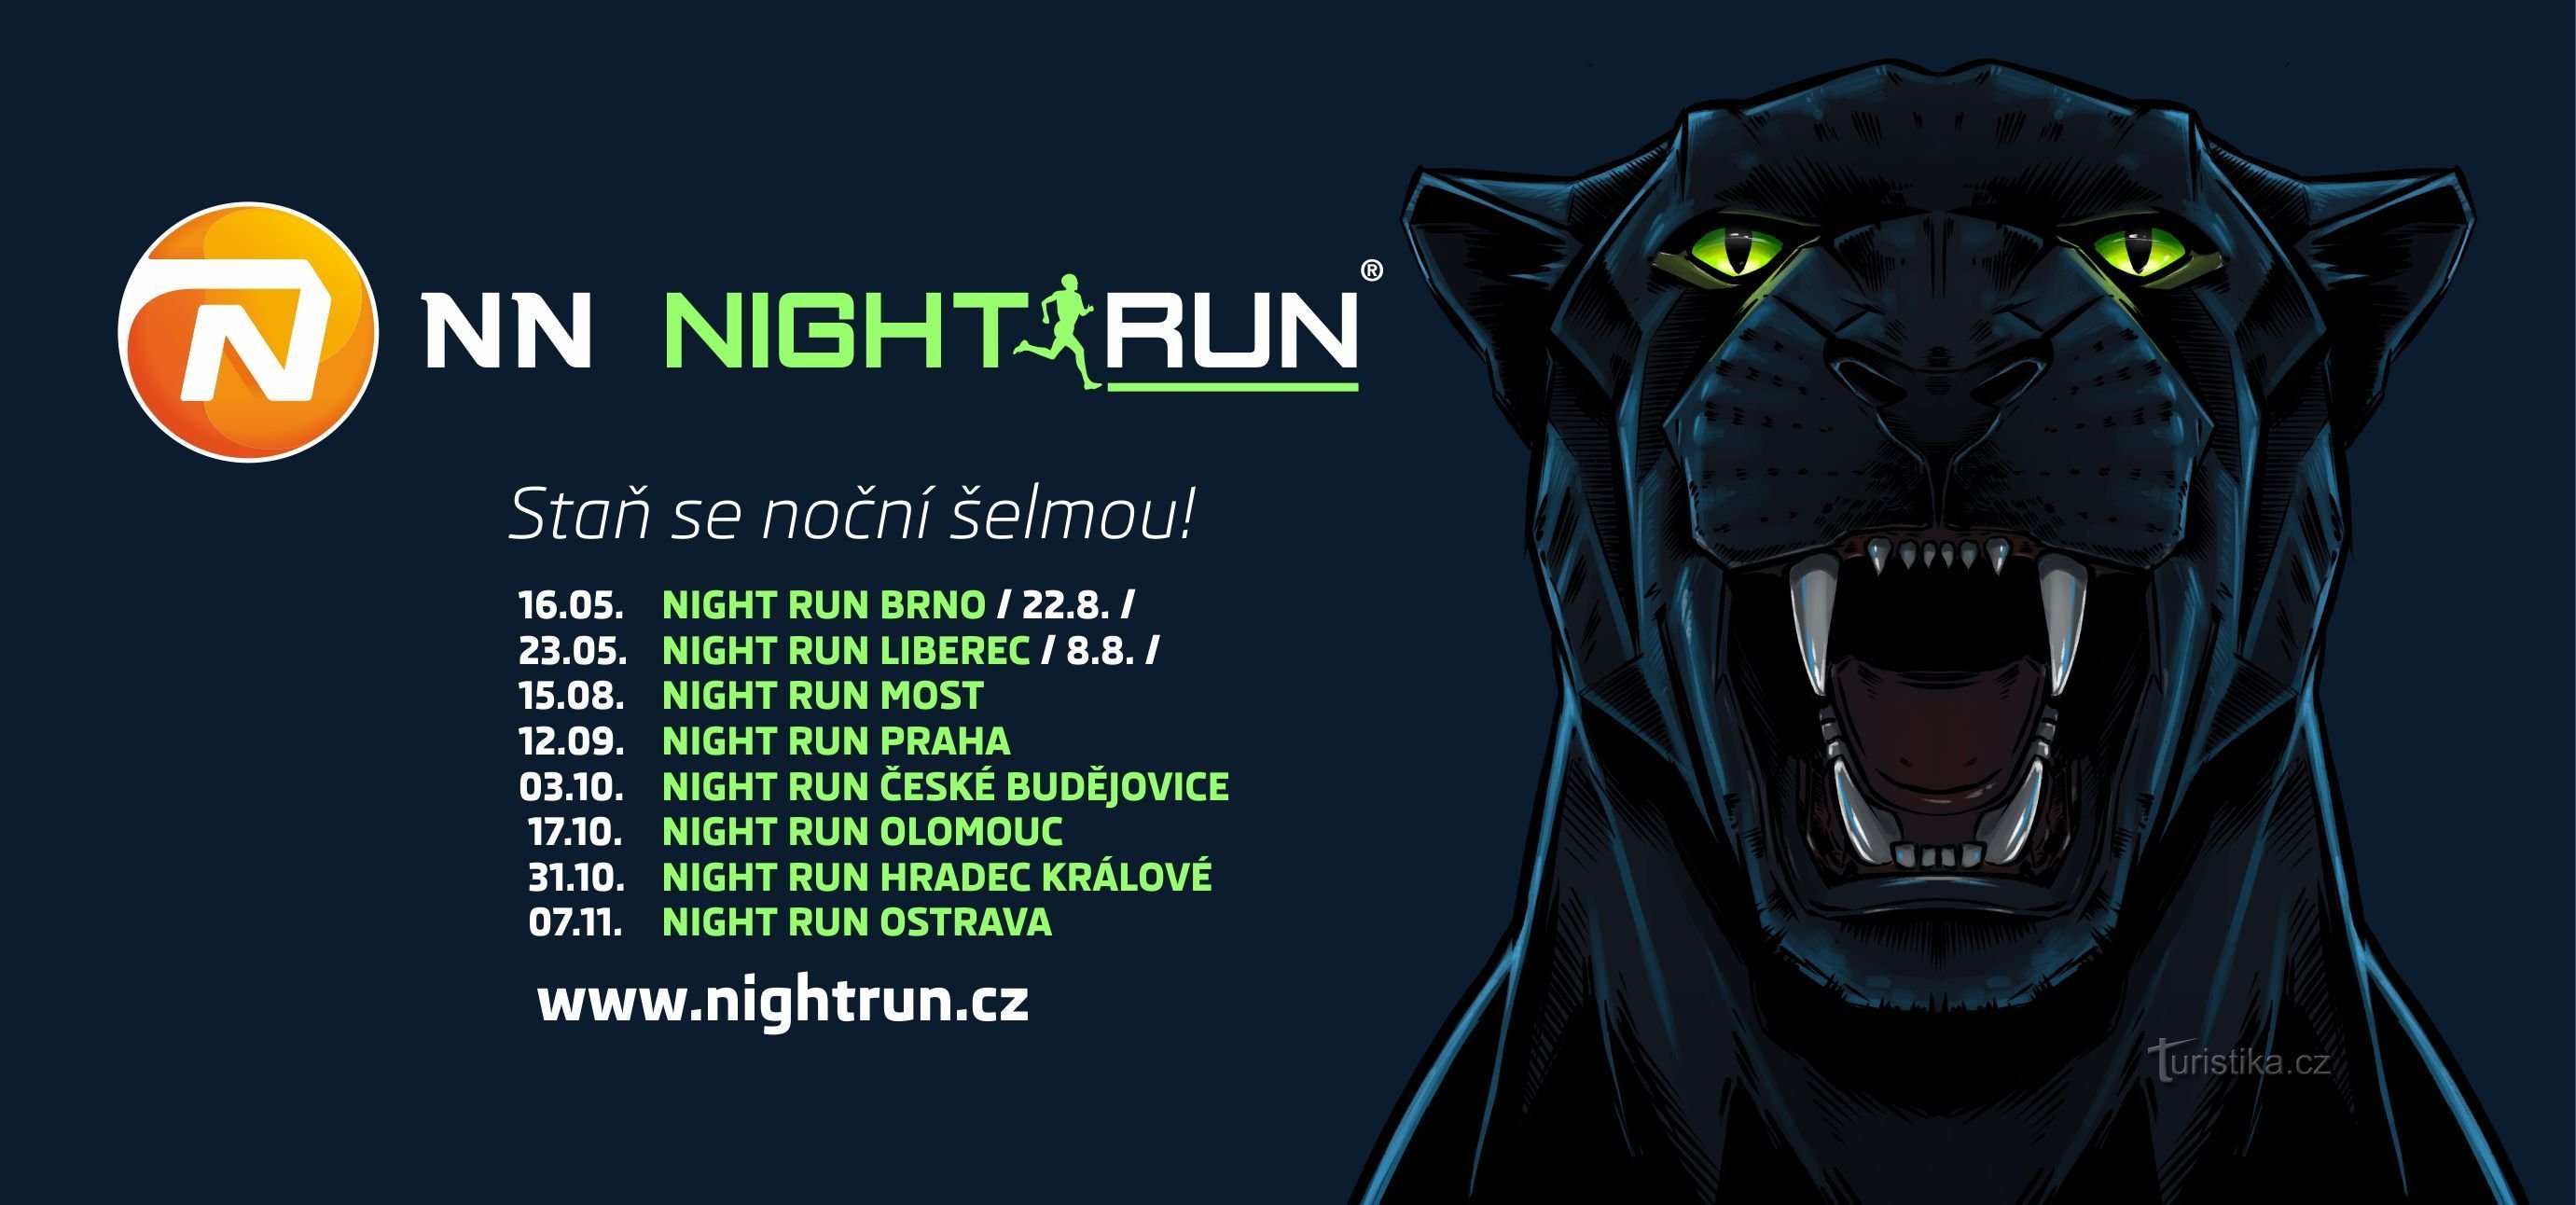 NN NIGHT RUN: Seven reasons to run